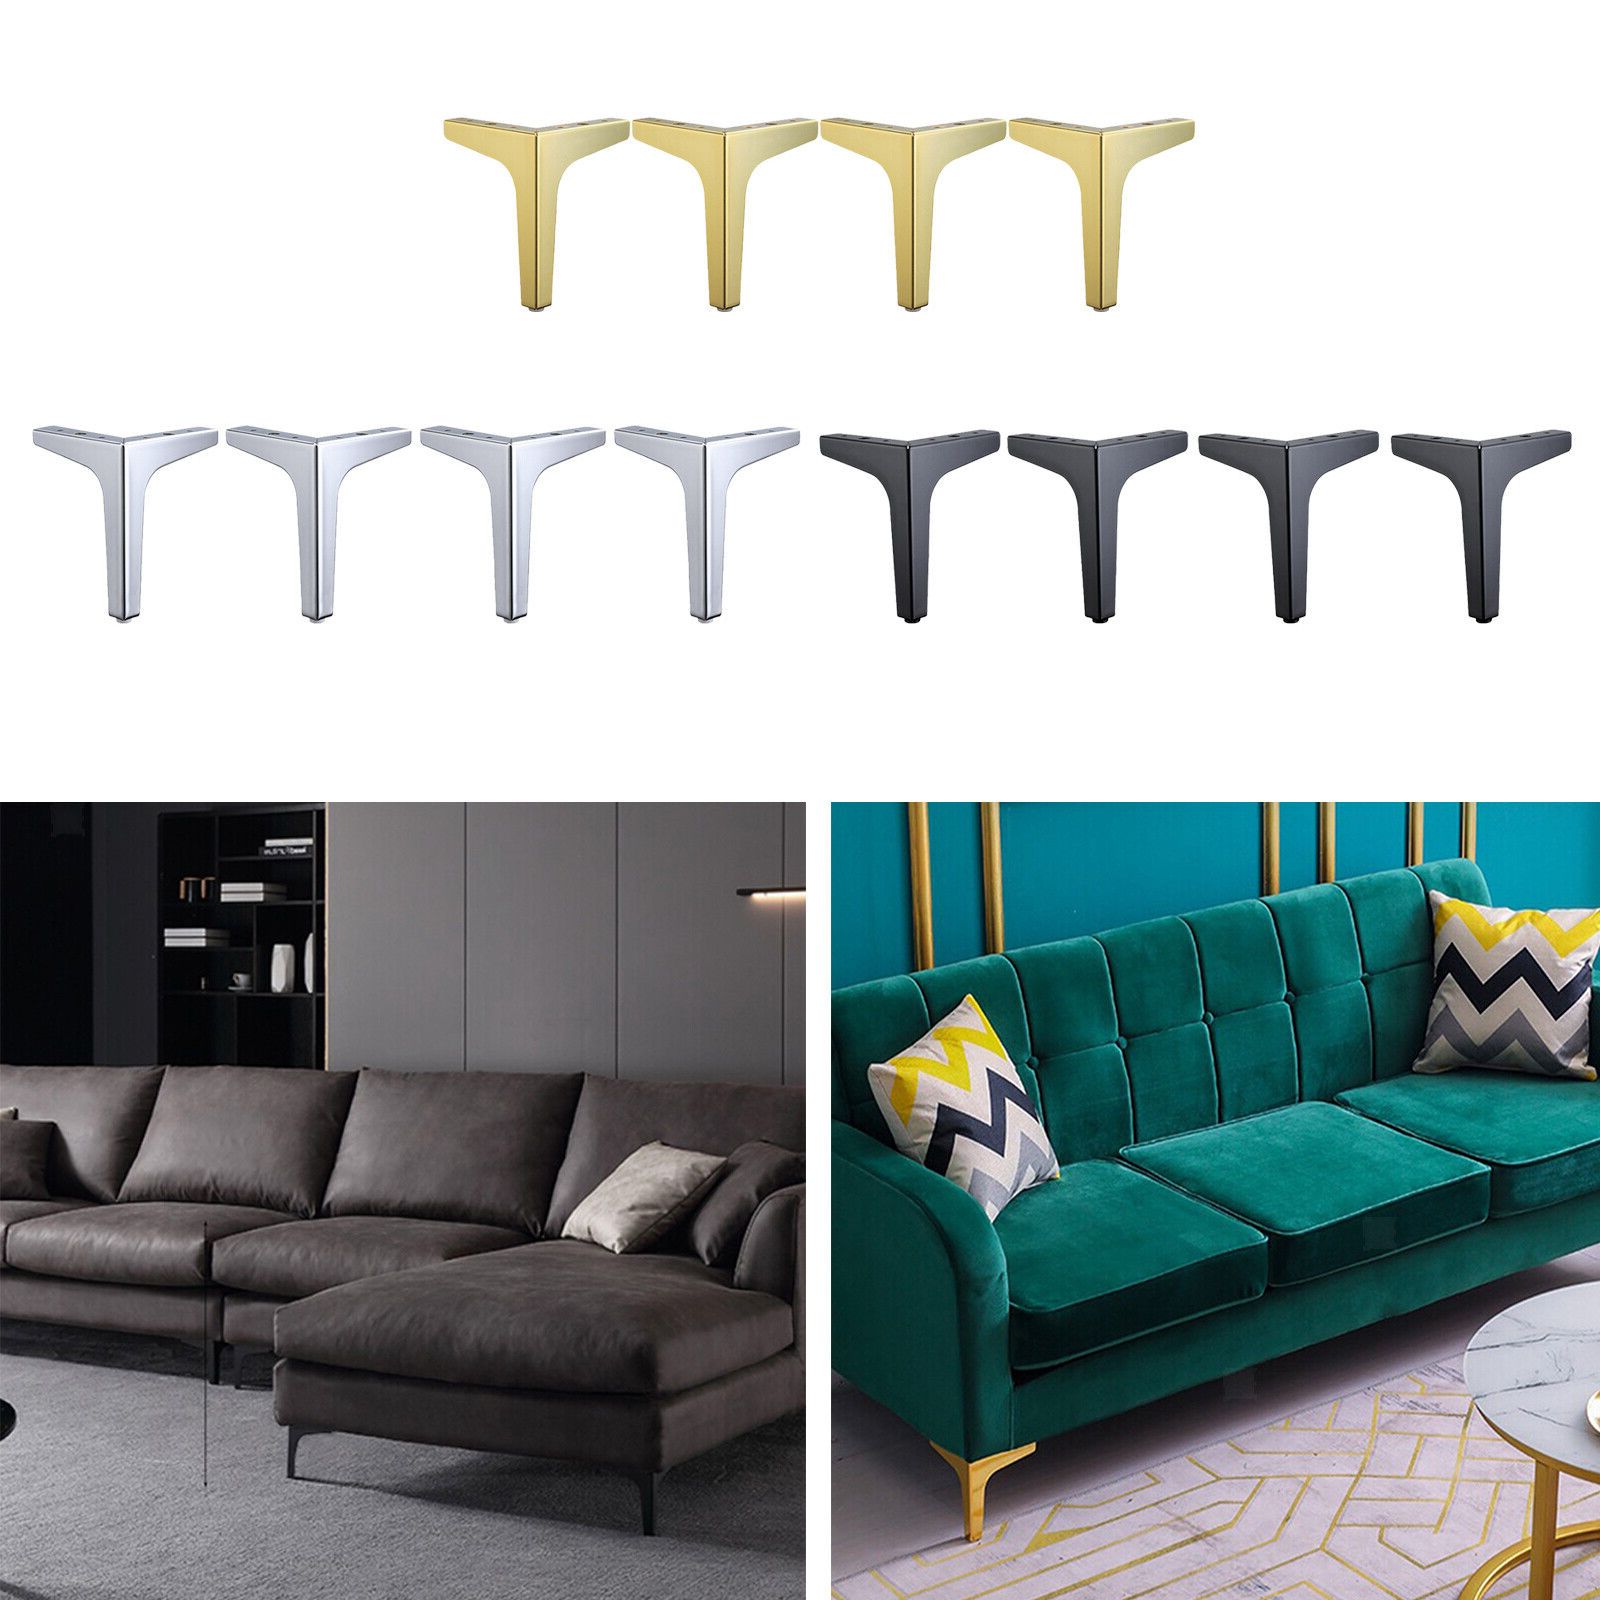 Metal Furniture Legs Sofa Loveseat Chair Sectional – Set Of 4 Black/gold/ Chrome | Ebay Regarding Chrome Metal Legs Sofas (Gallery 11 of 20)